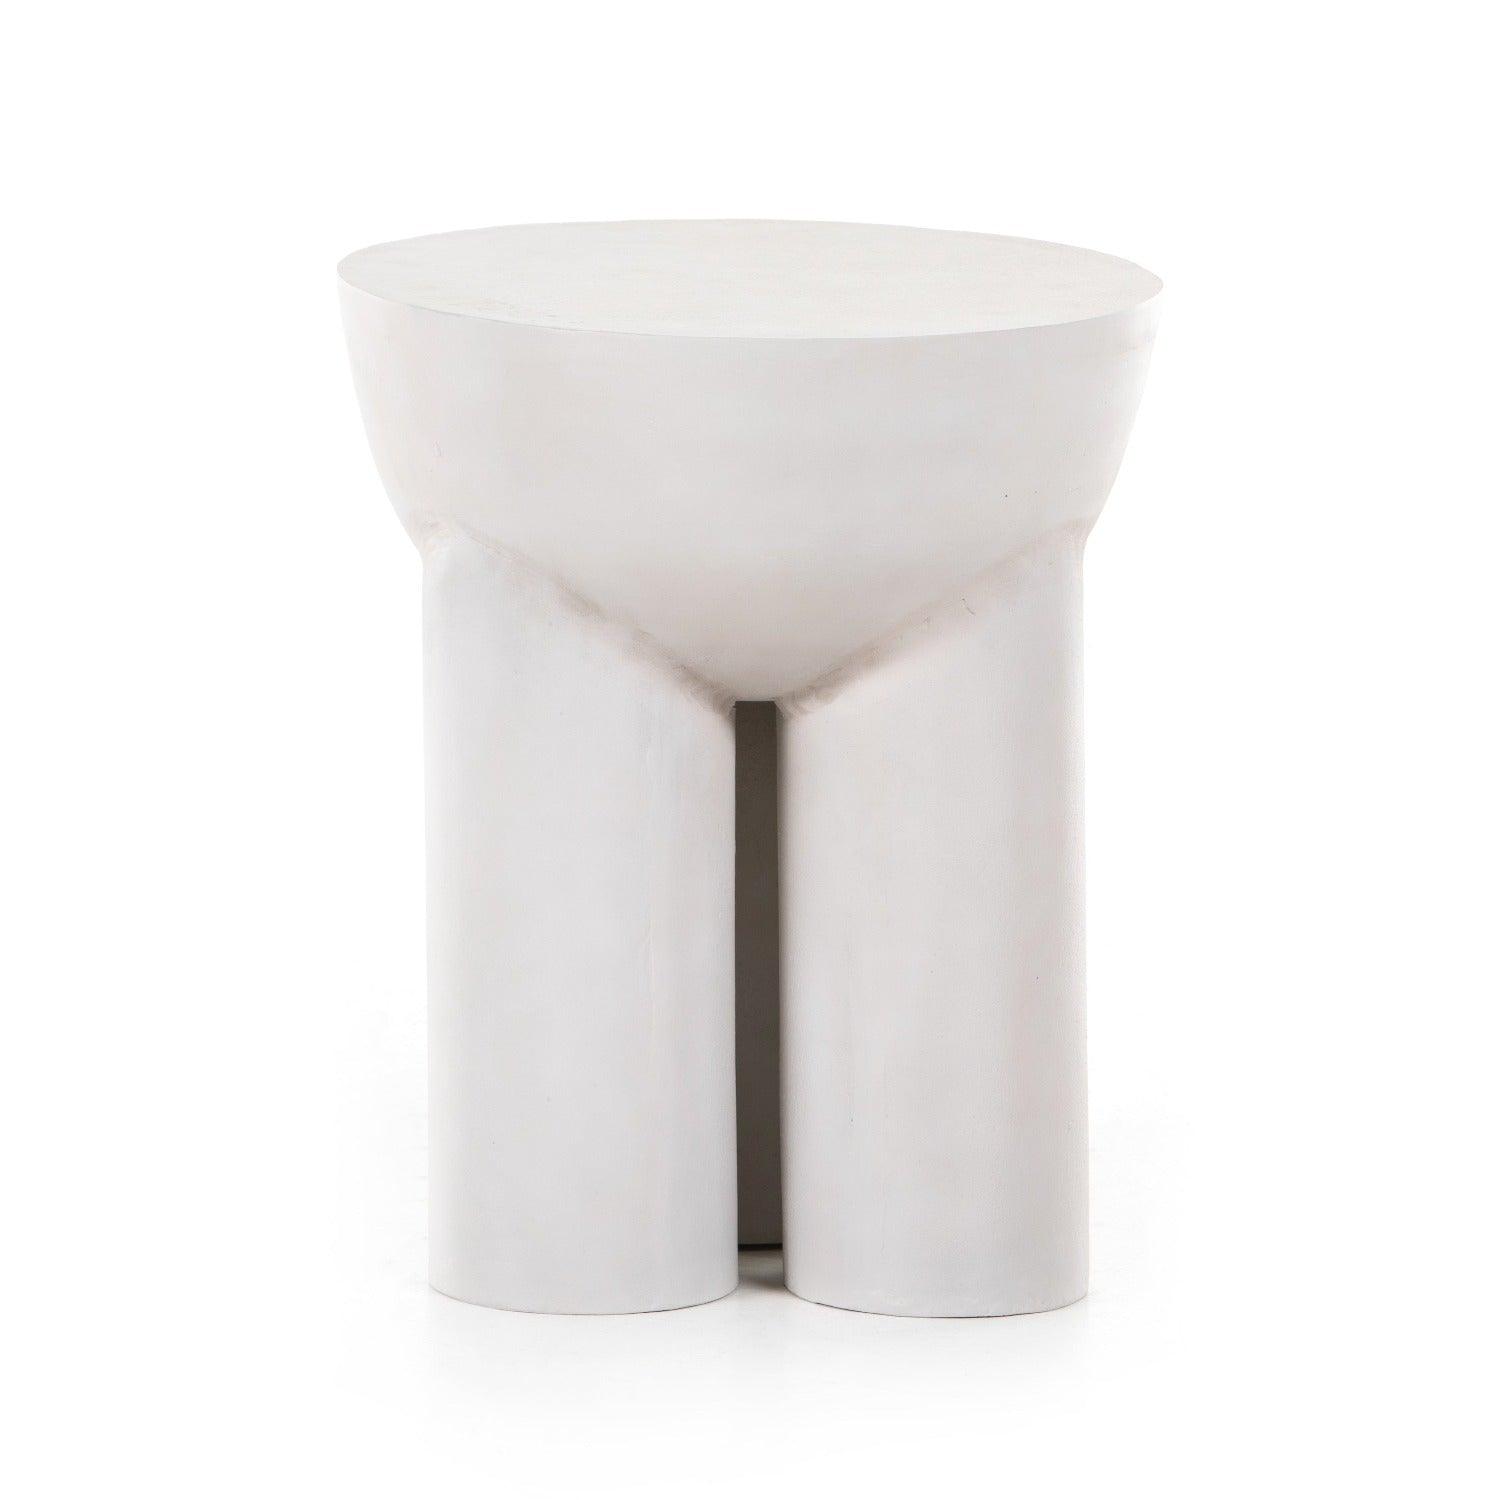 Sante White End Table - Reimagine Designs - new, ottoman, side table